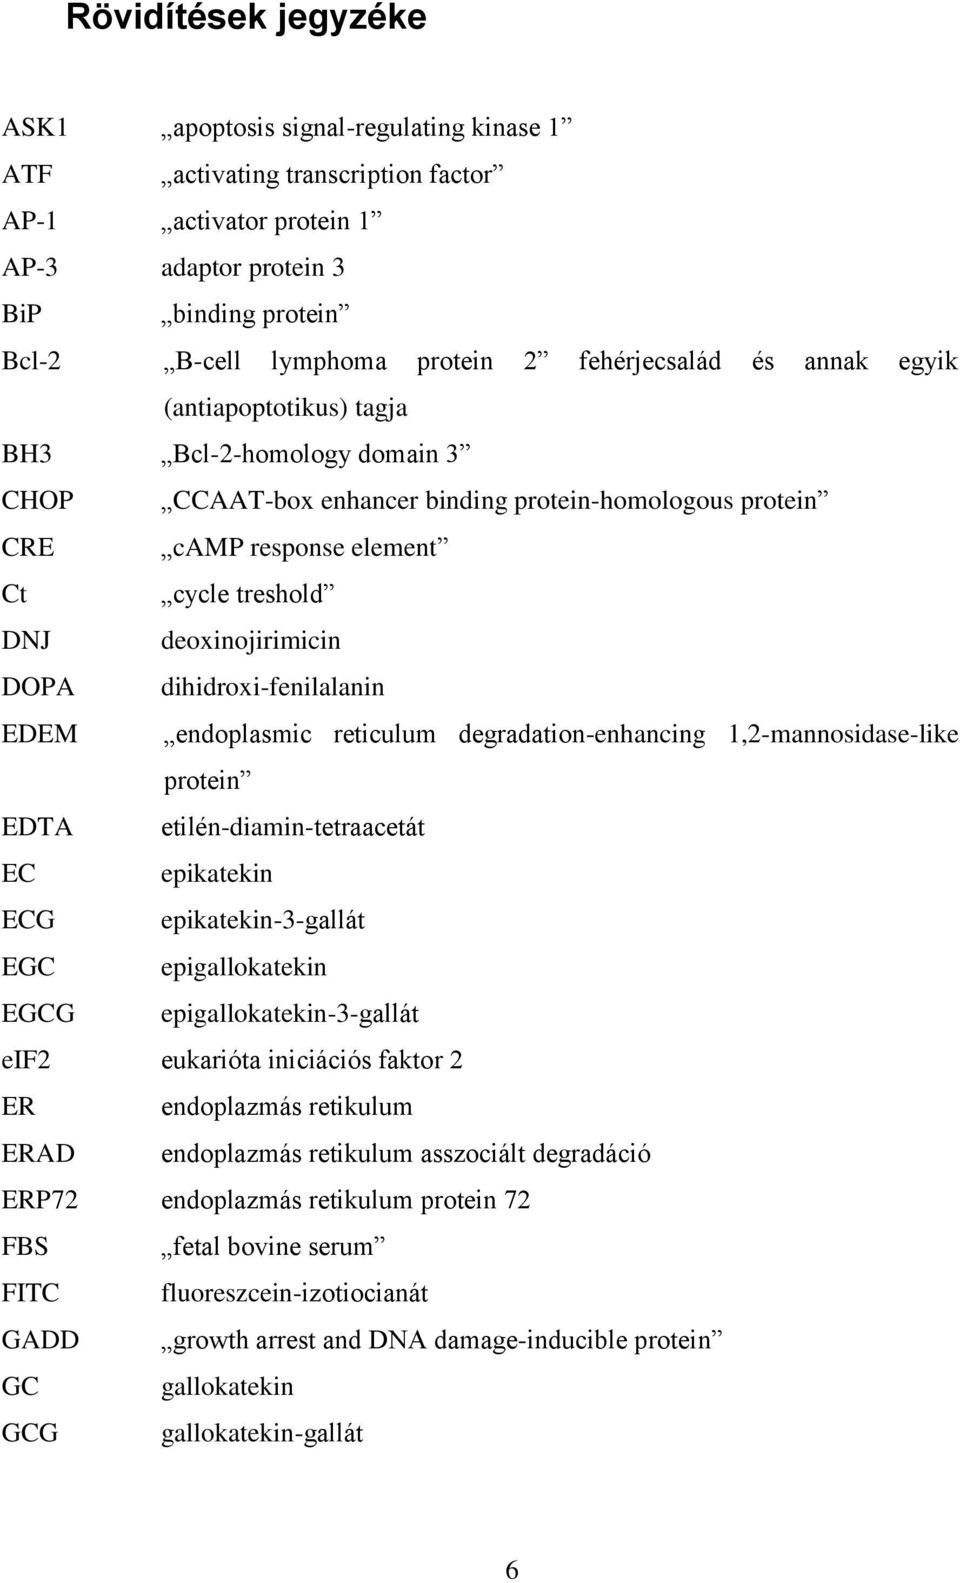 deoxinojirimicin DOPA dihidroxi-fenilalanin EDEM endoplasmic reticulum degradation-enhancing 1,2-mannosidase-like protein EDTA etilén-diamin-tetraacetát EC epikatekin ECG epikatekin-3-gallát EGC